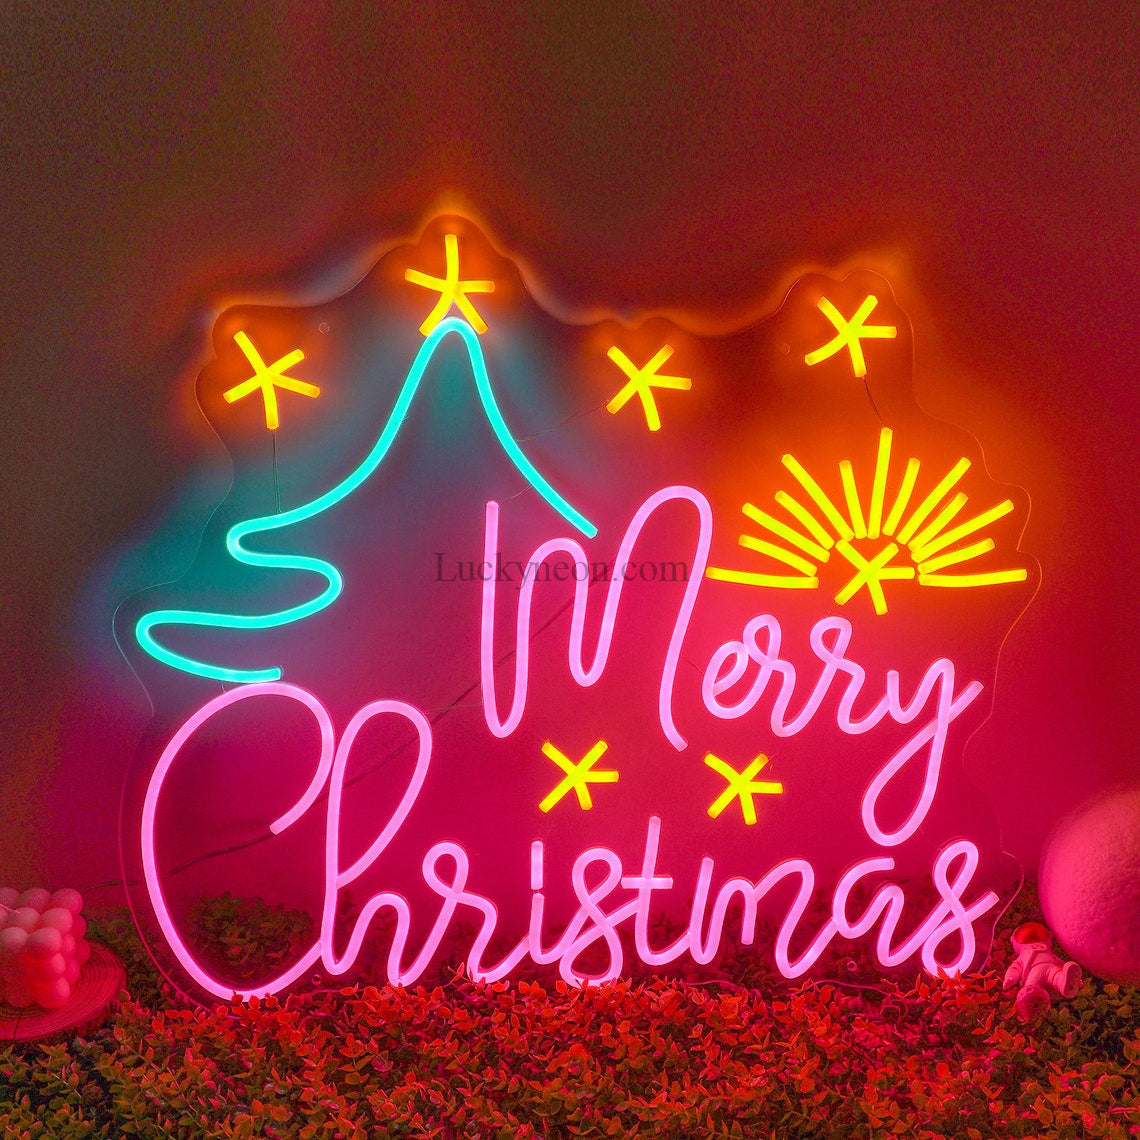 Merry Christmas Santa Claus Neon Sign Custom Bar Silhouette Flexible LED Wall Bedroom Acrylic Art Christmas Ornament Holiday Decor